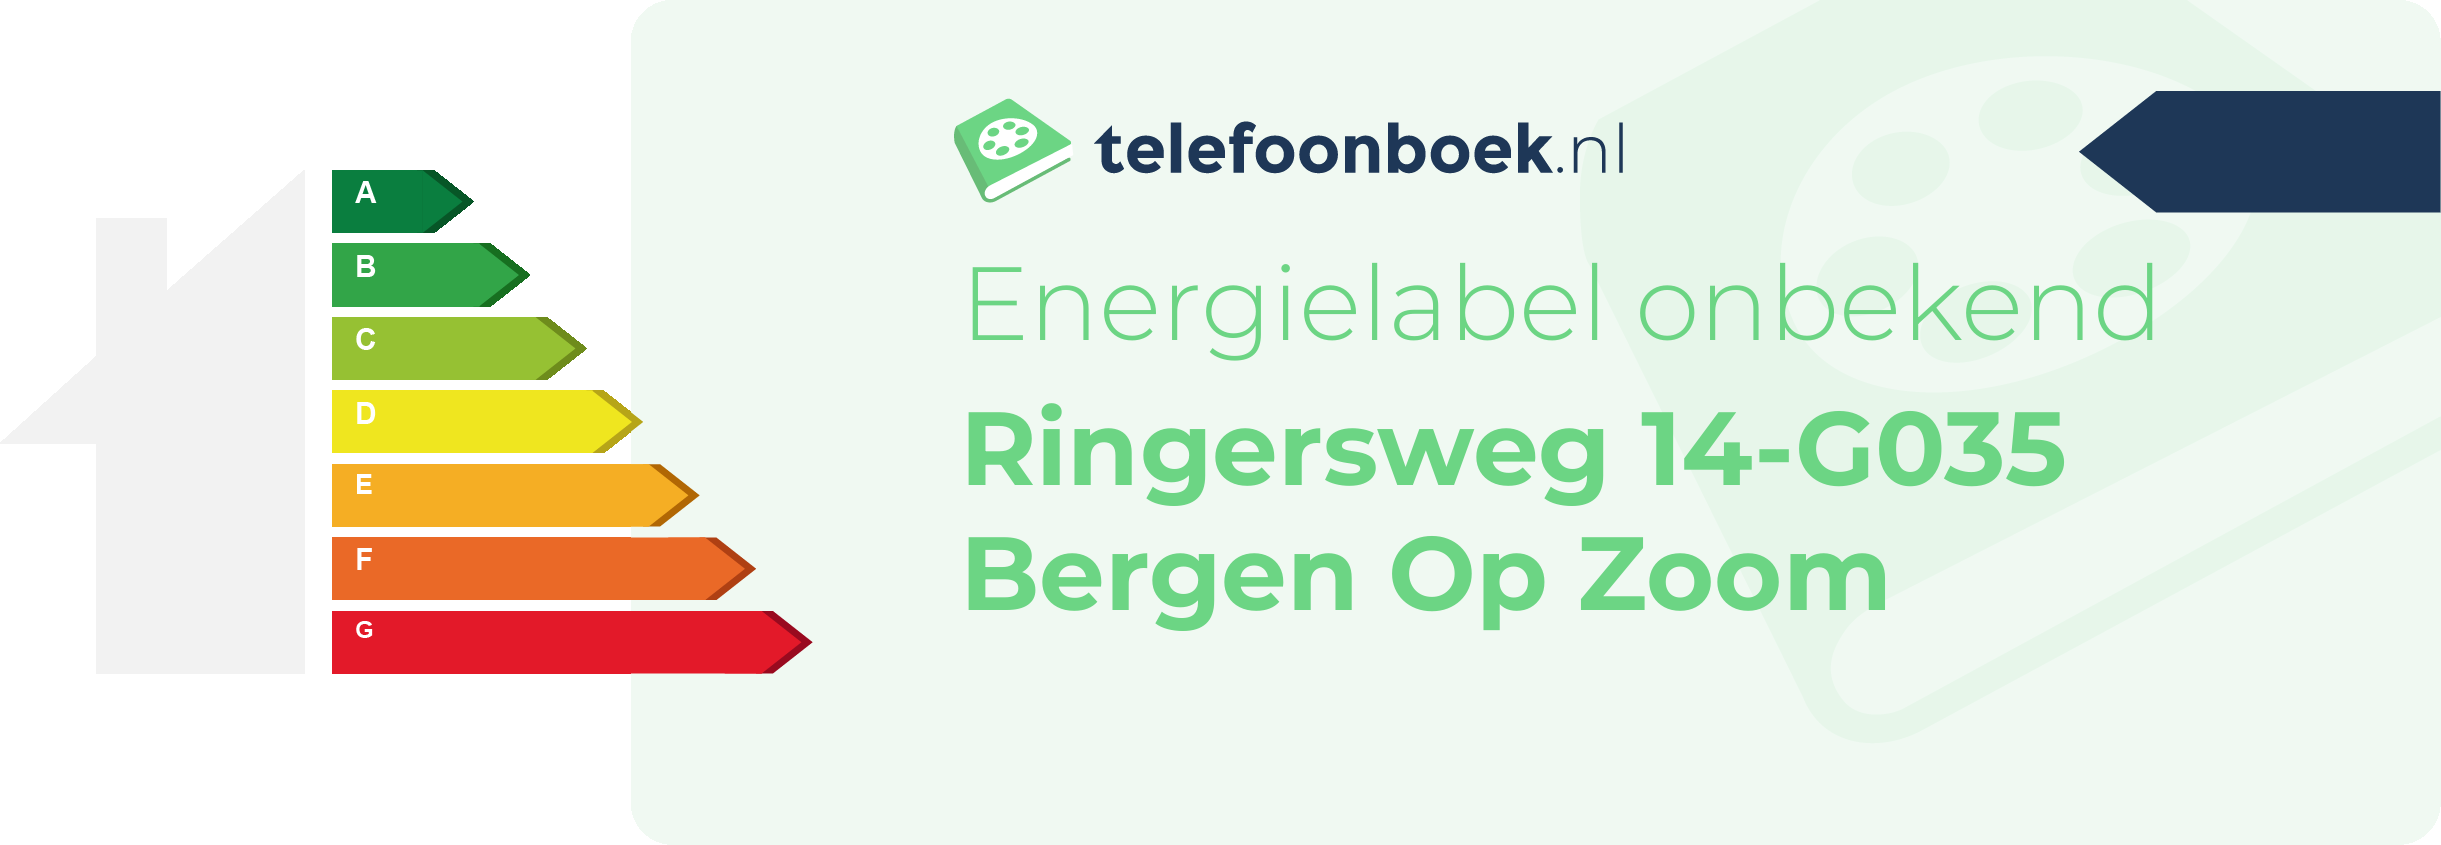 Energielabel Ringersweg 14-G035 Bergen Op Zoom